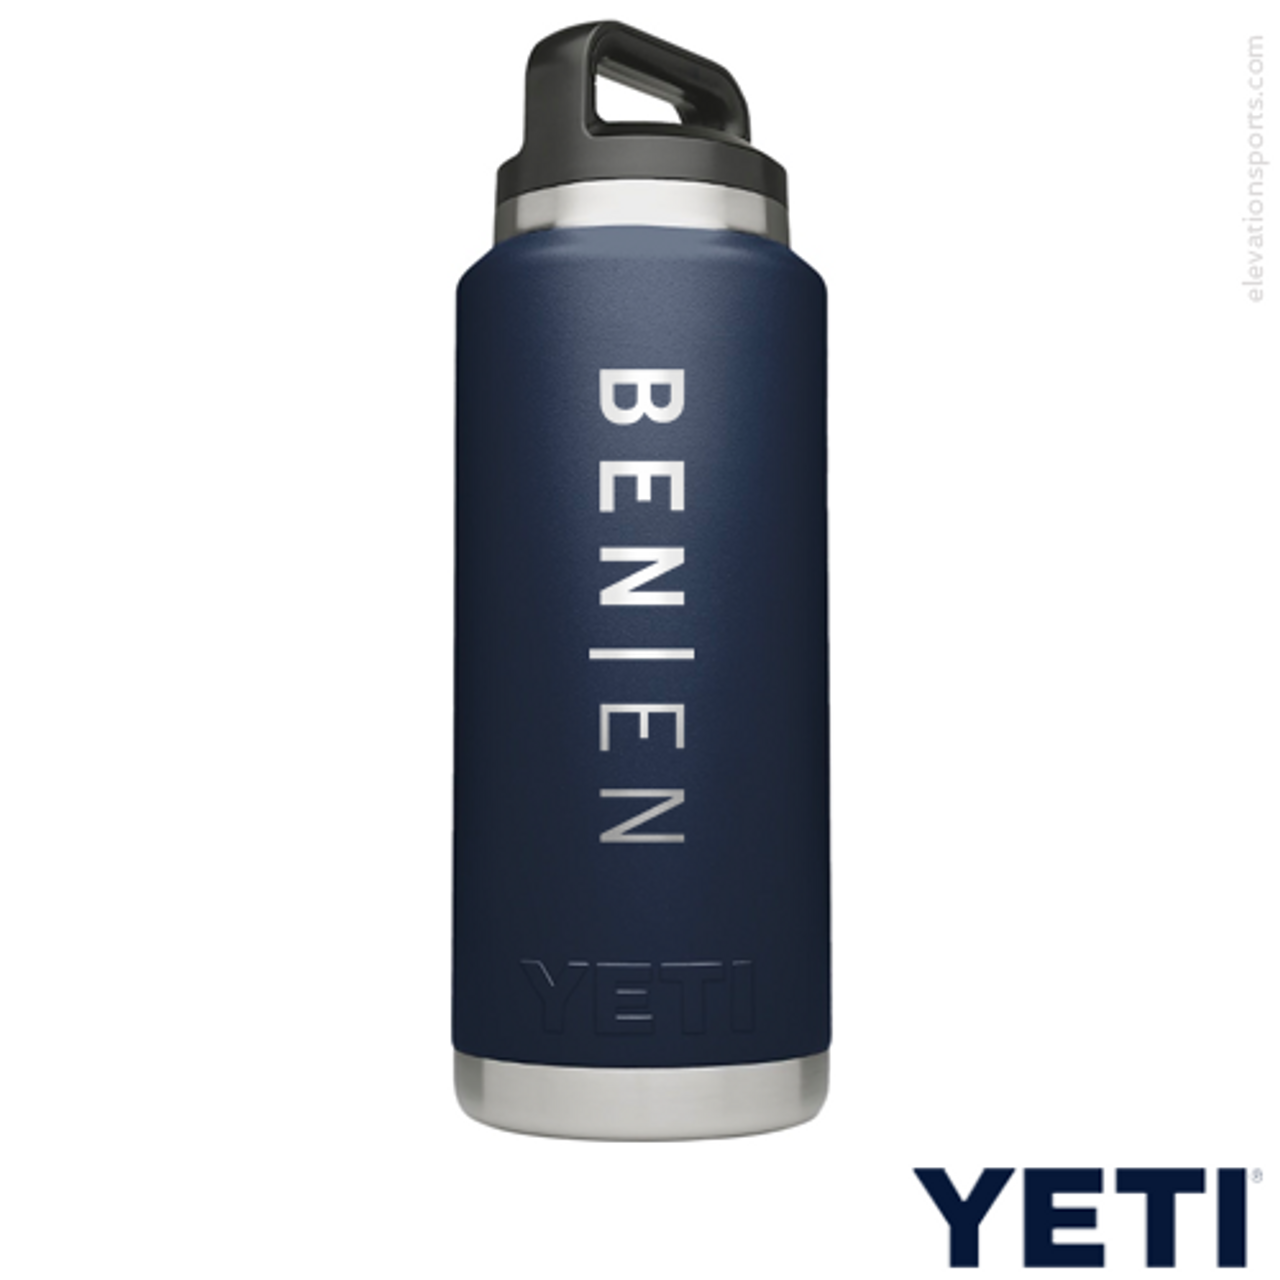 Custom Yeti 36oz Reef Blue Bottle with Sea Turtle Hatteras Island